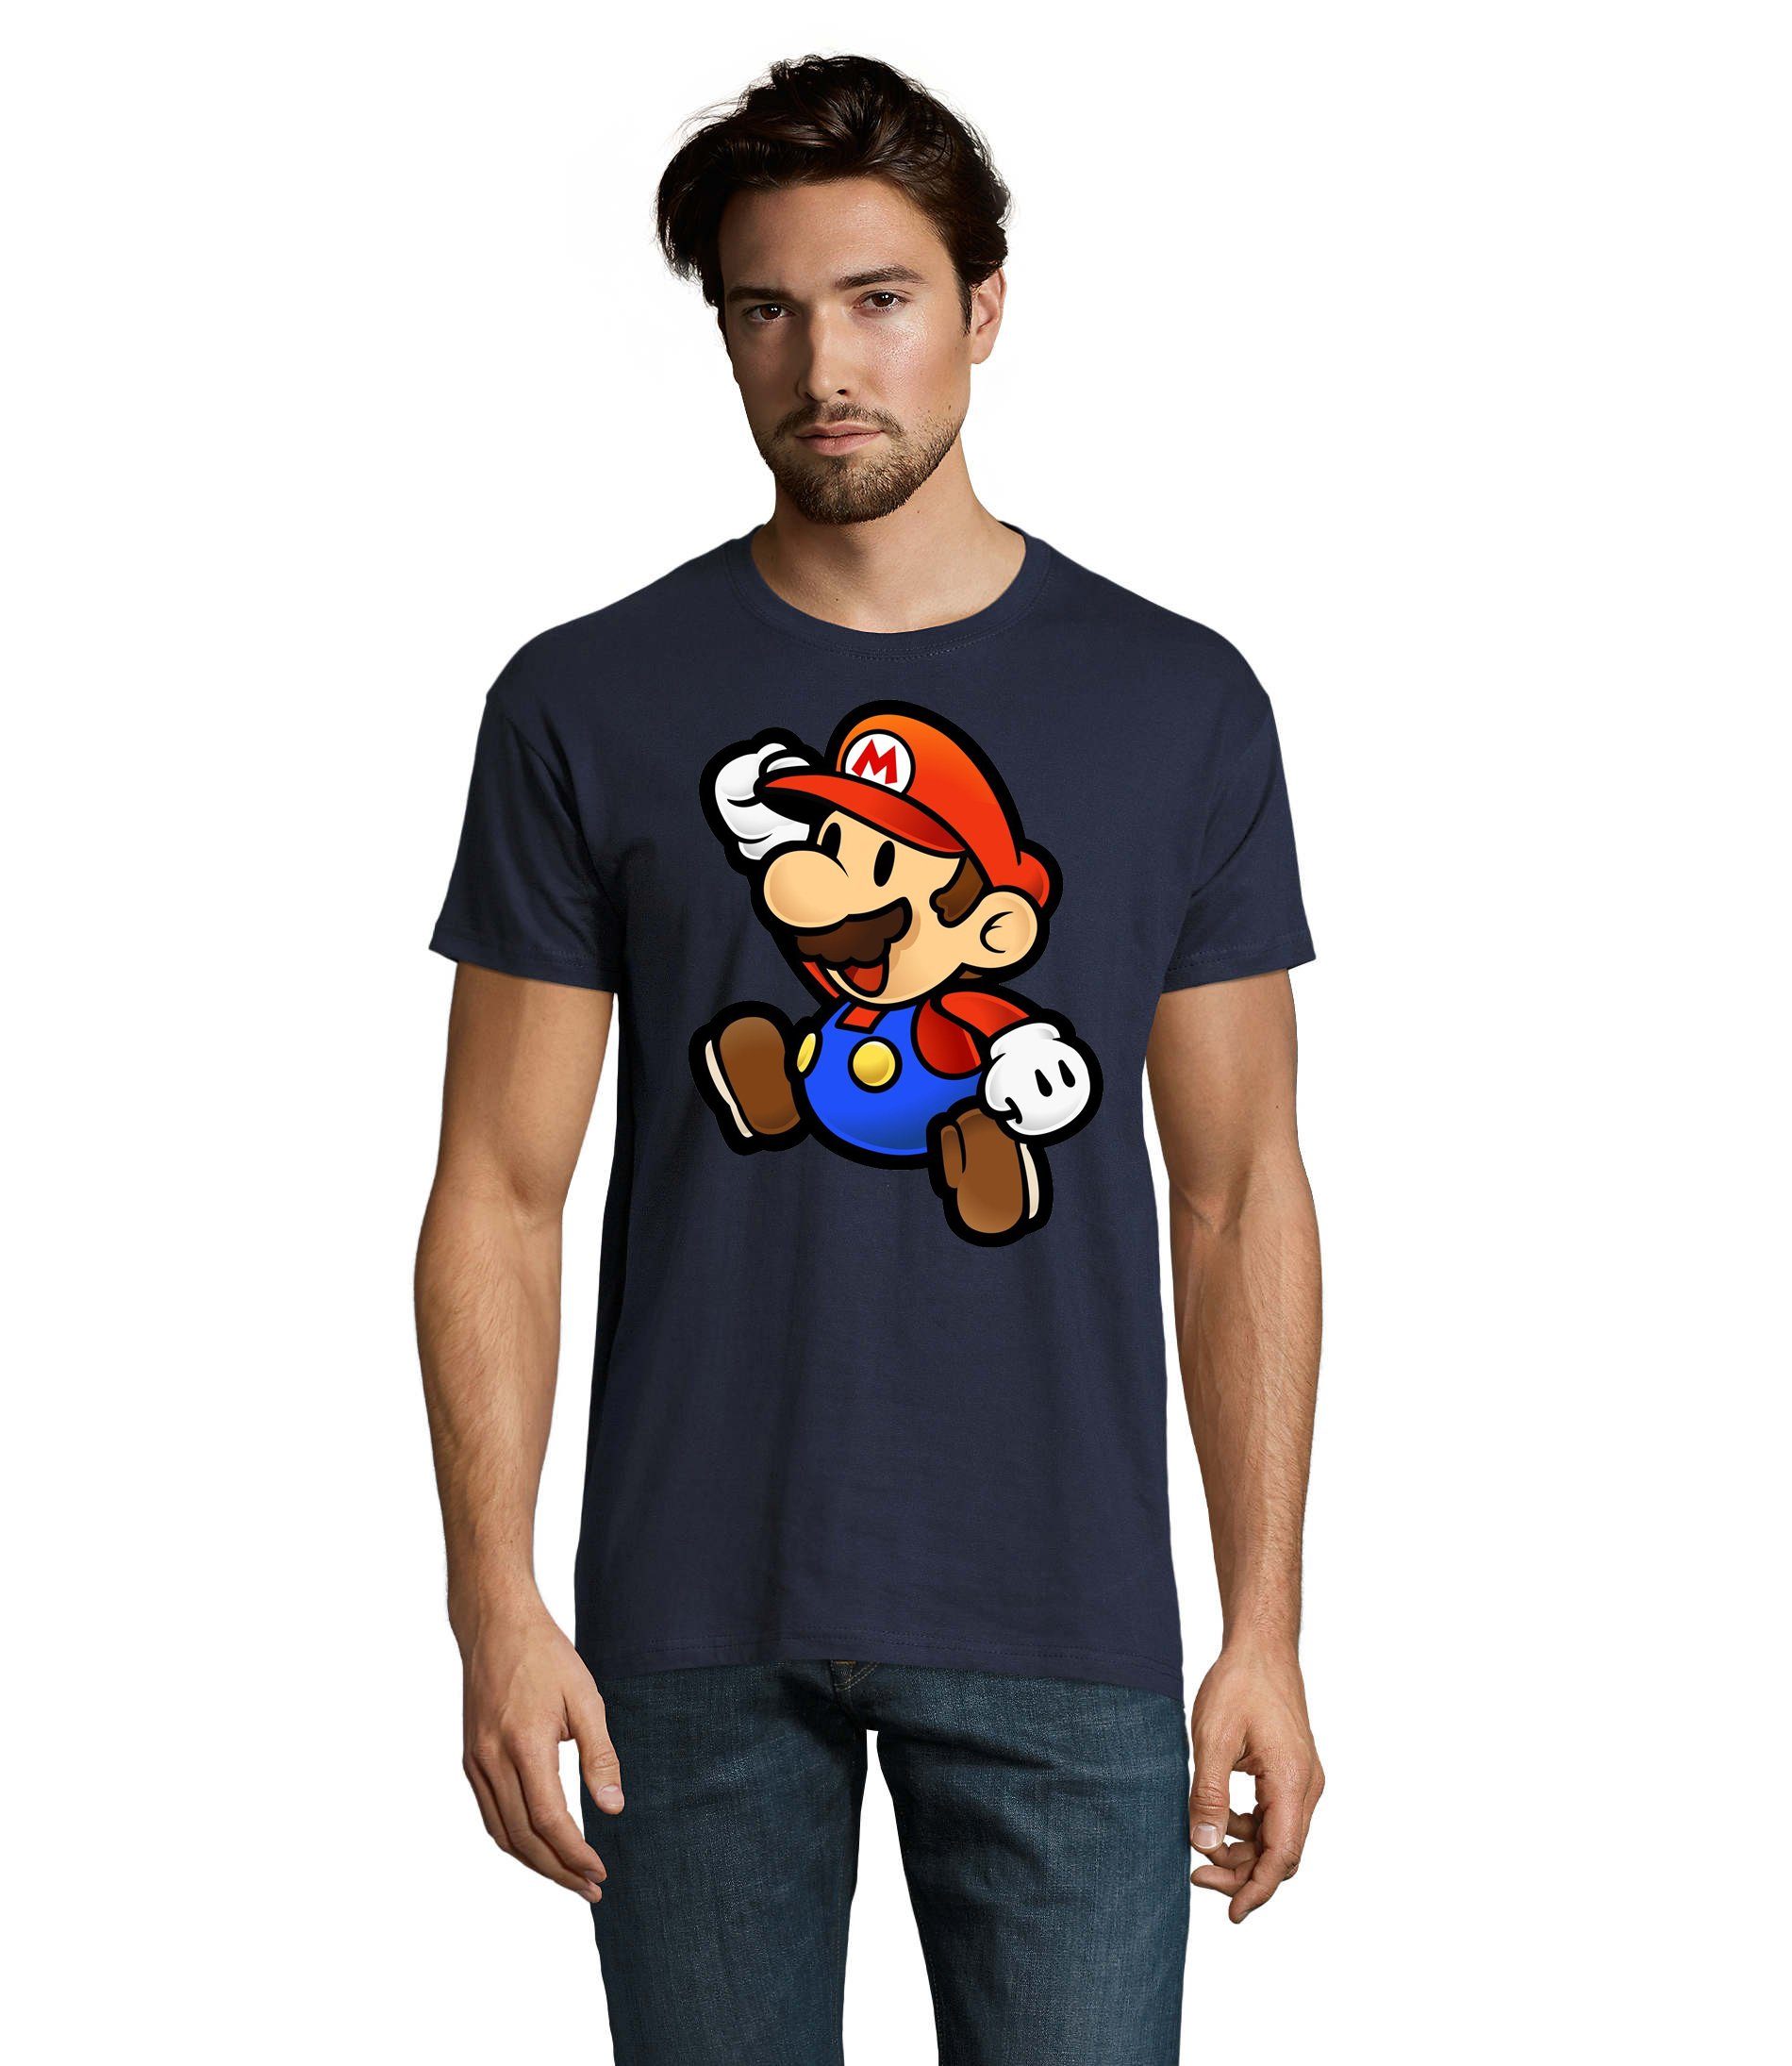 & Herren Brownie Super Mario Nintendo Luigi Yoshi Navyblau T-Shirt Gaming Blondie